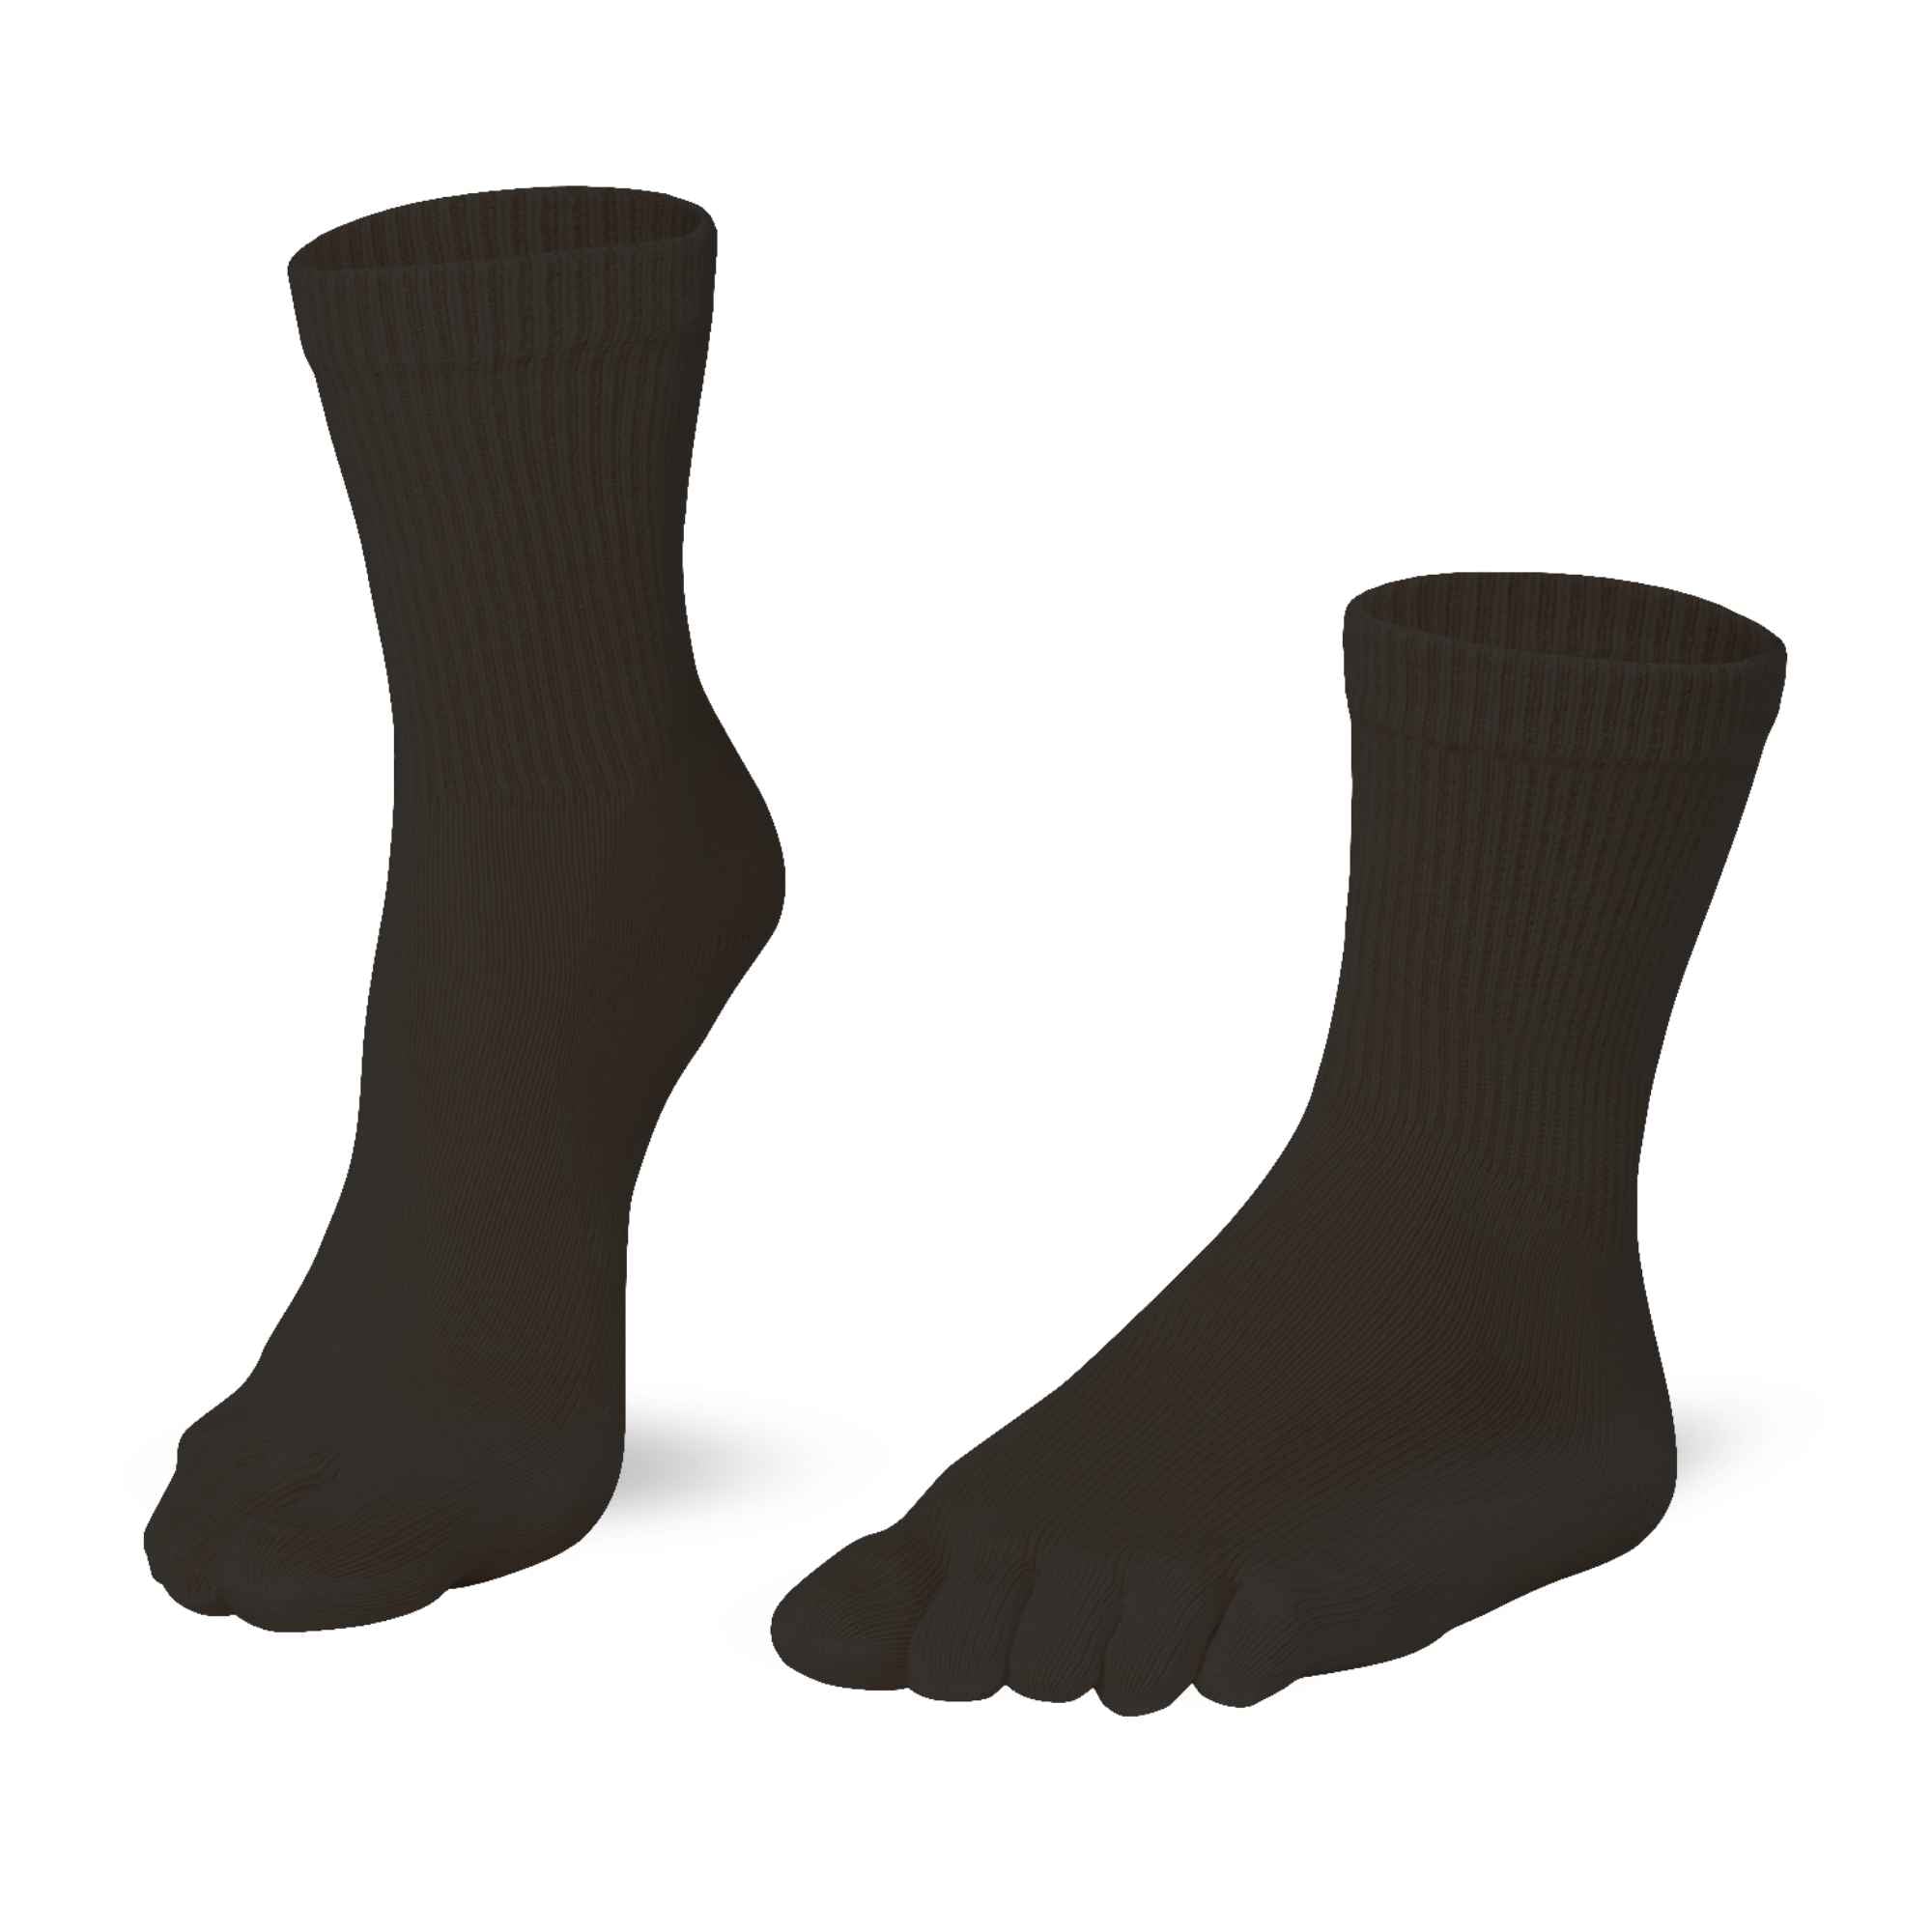 Knitido Cotton & Merino Crew Toe Socks